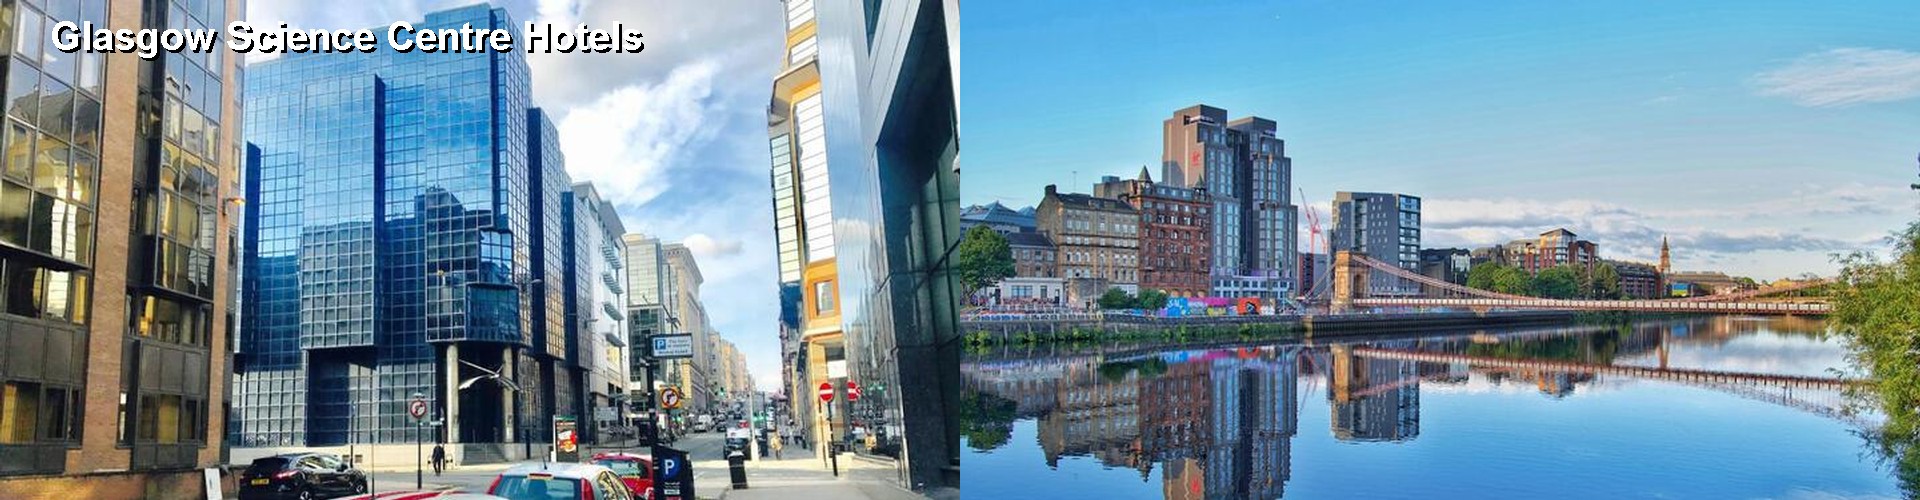 5 Best Hotels near Glasgow Science Centre